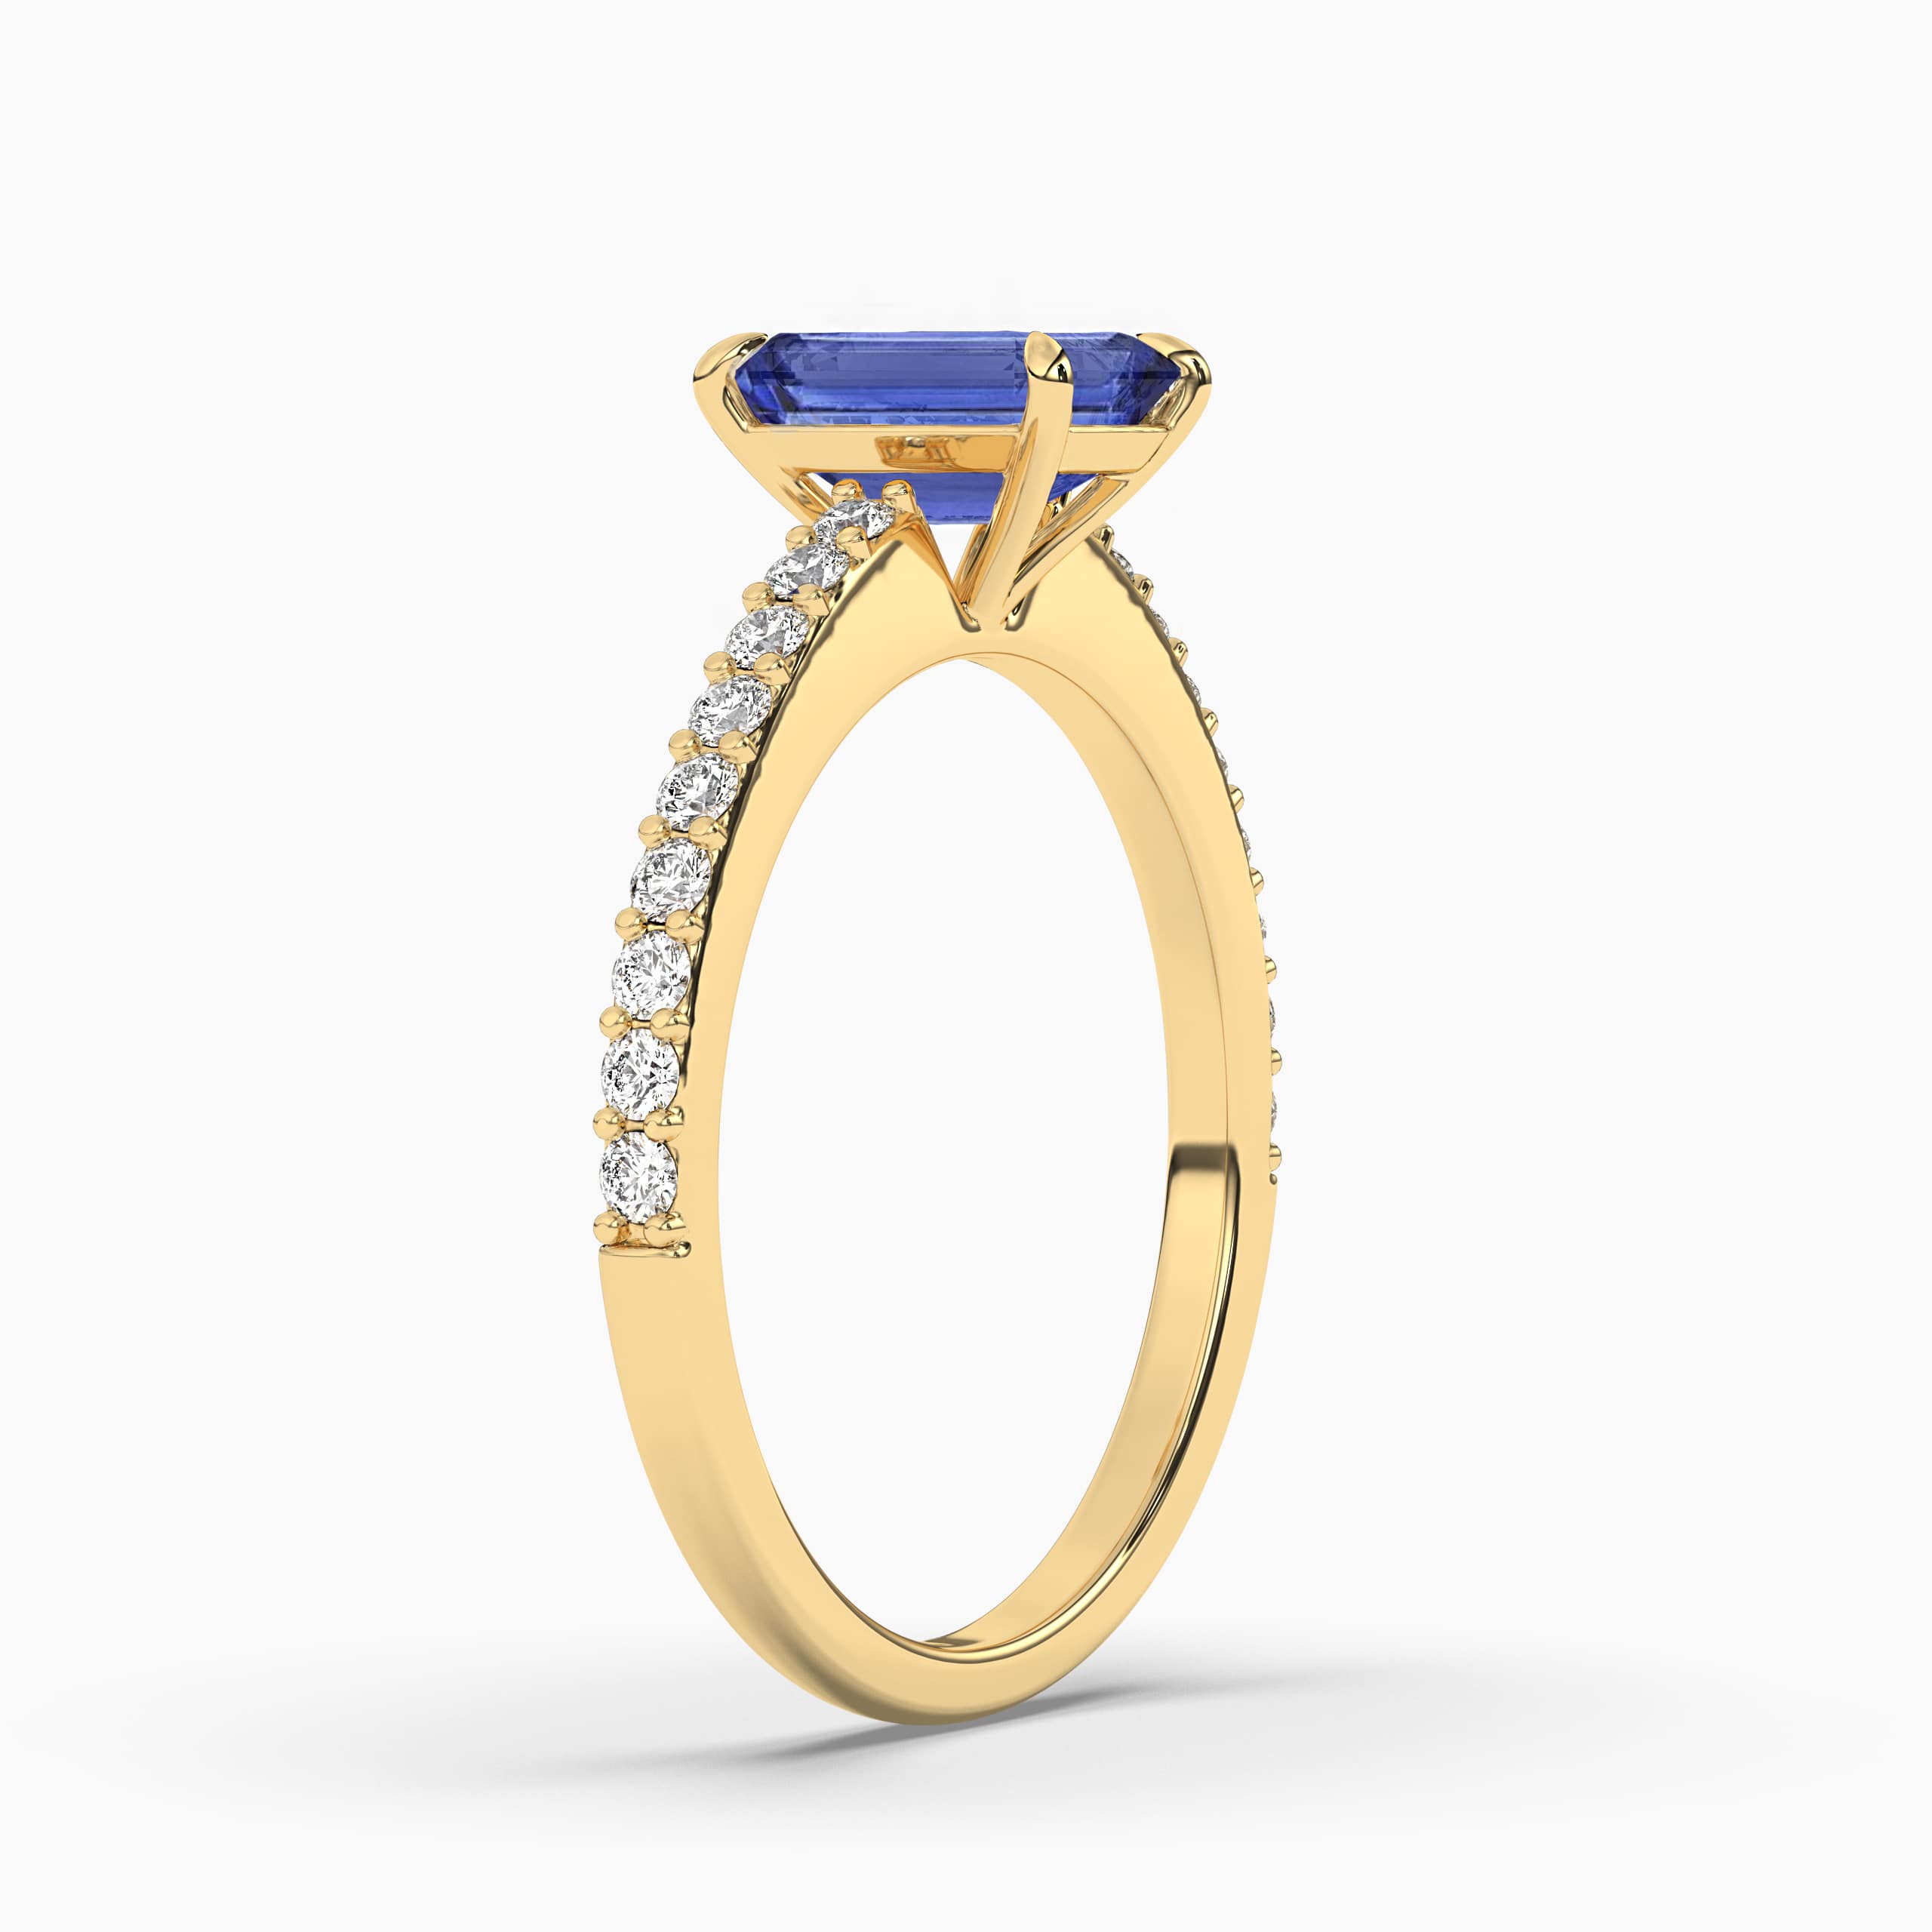 Emerald Cut Blue Sapphire Engagement Ring